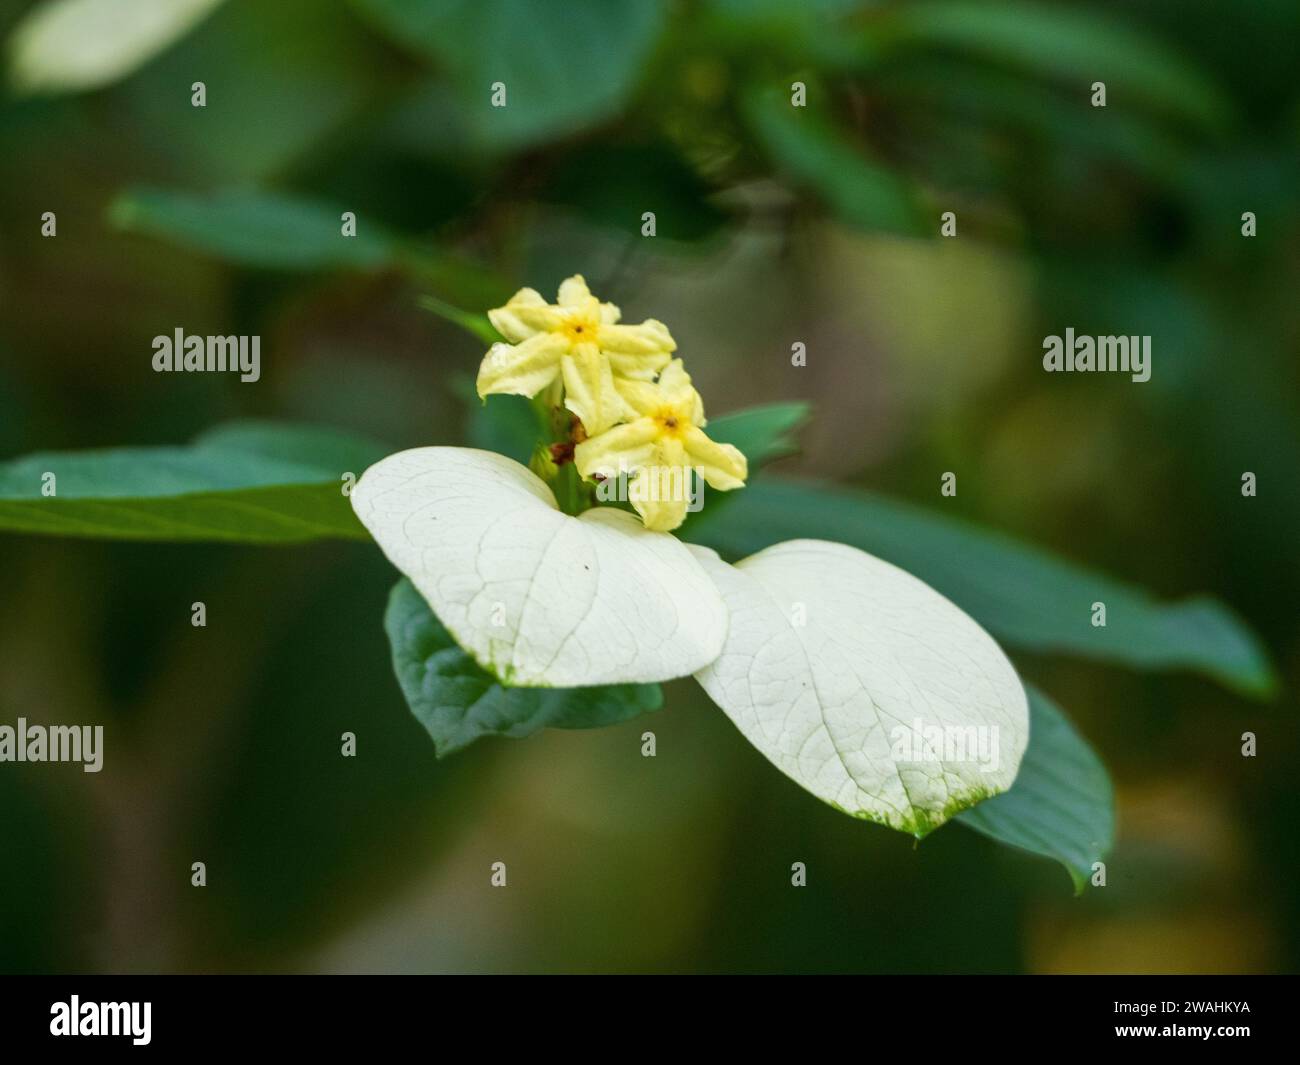 Pseudomussaenda flava aka White Wings yellow Star shaped flowers, white finely veined bracts, green leaves Stock Photo